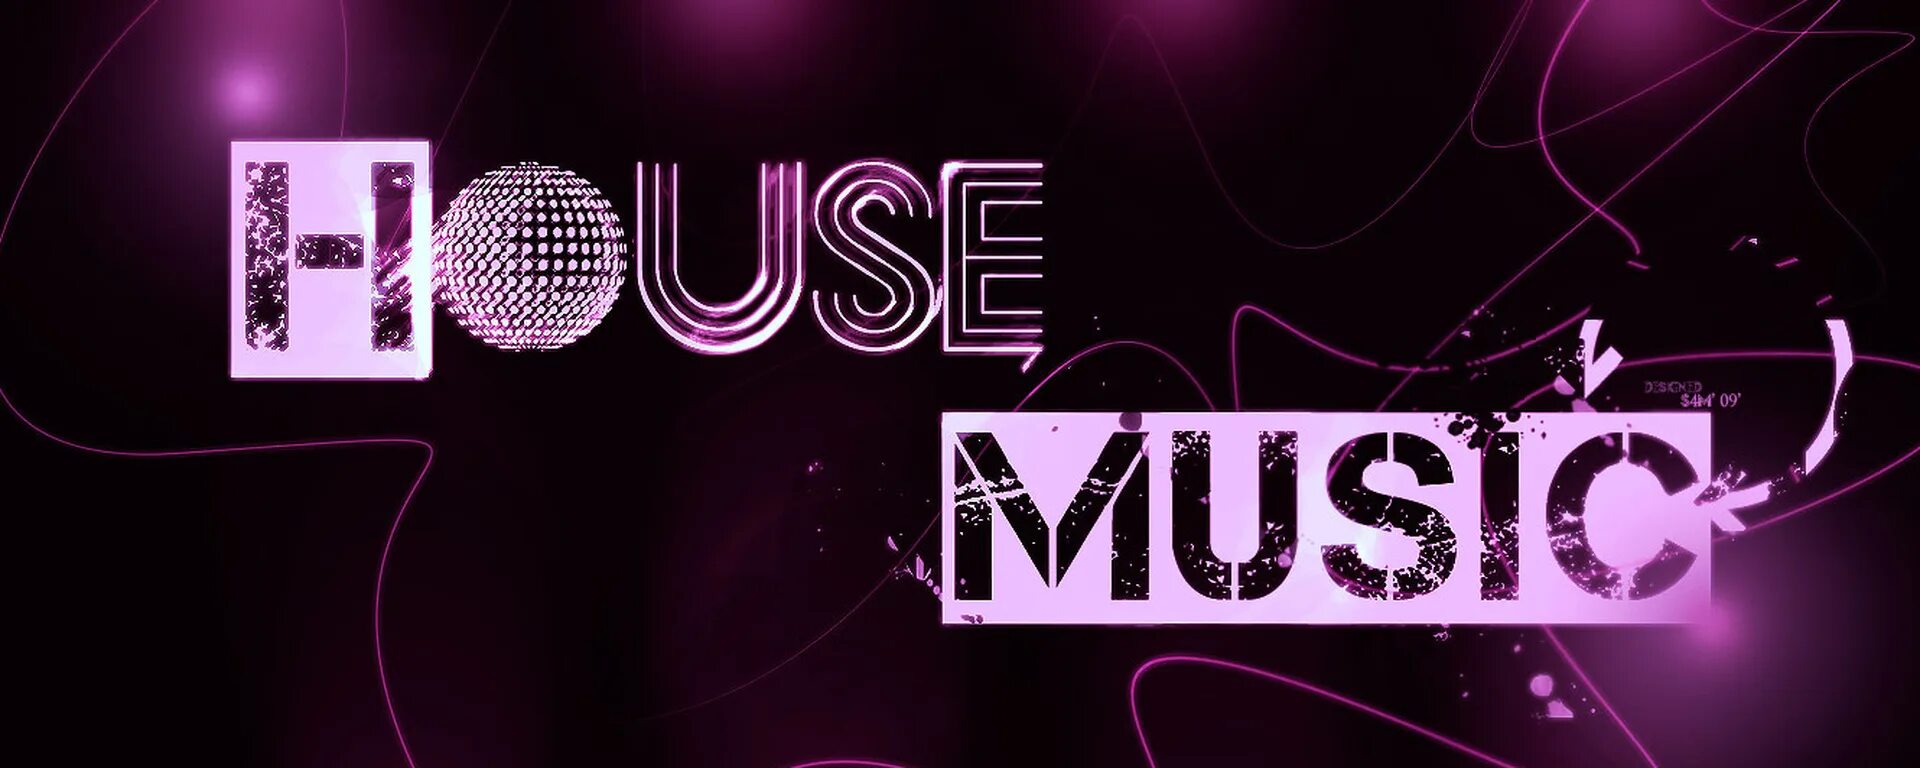 Хаус Мьюзик. House Music картинки. Хаус стиль музыки. House Music обложка. Музыка house music